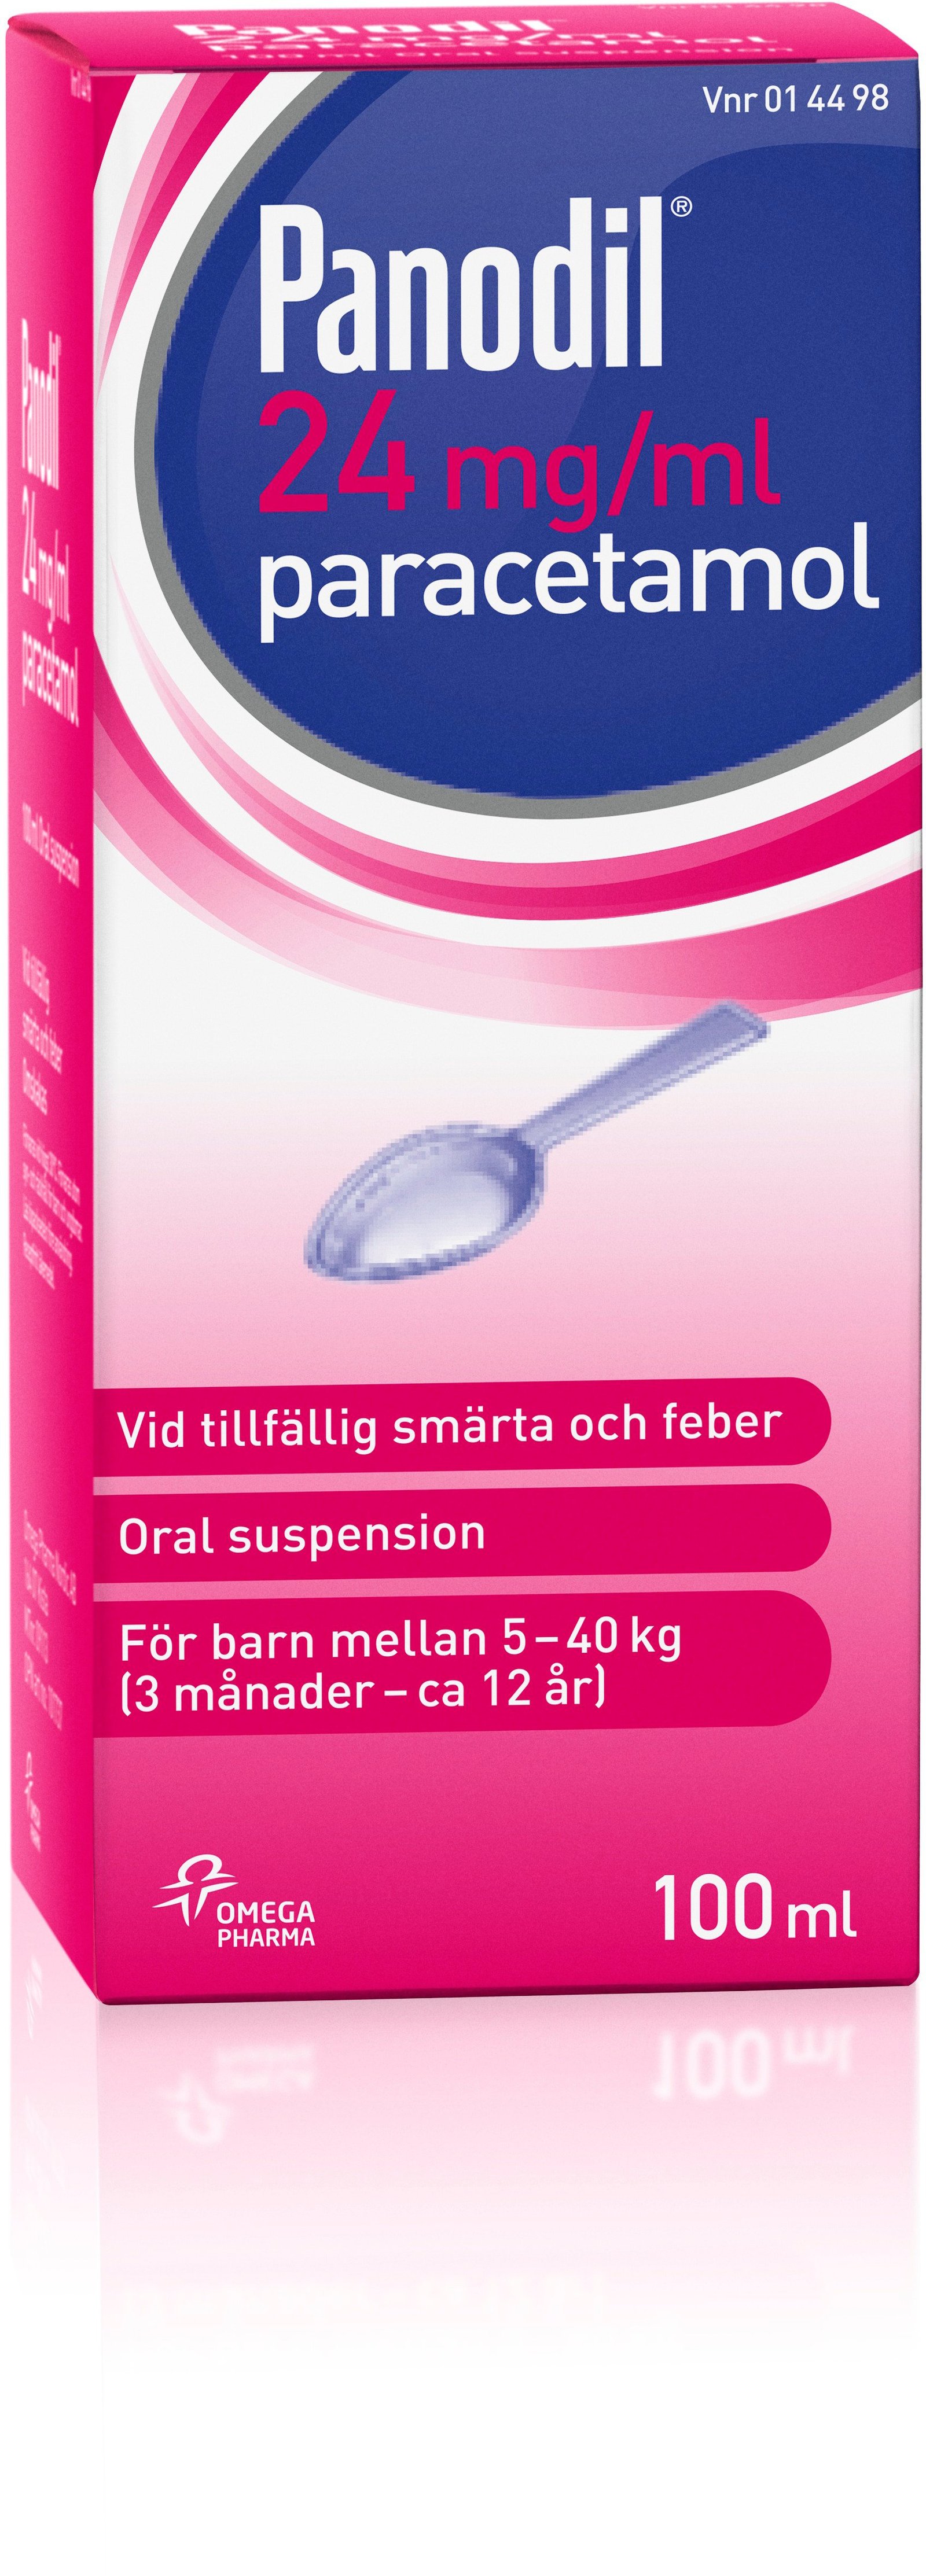 Panodil 24 mg/ml oral suspension 100 ml